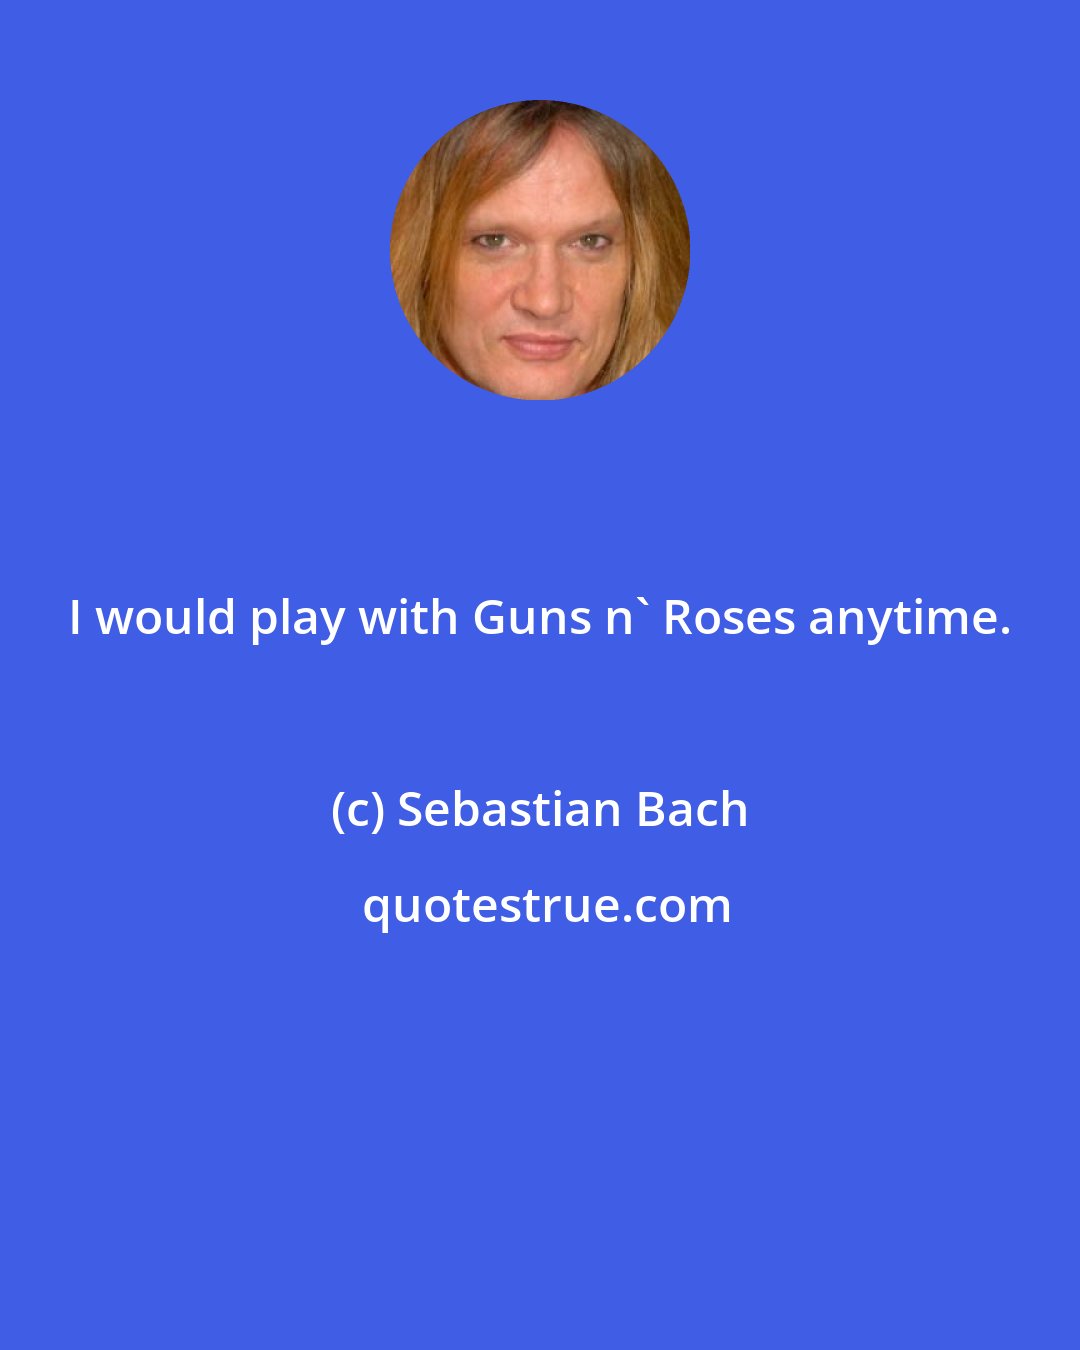 Sebastian Bach: I would play with Guns n' Roses anytime.